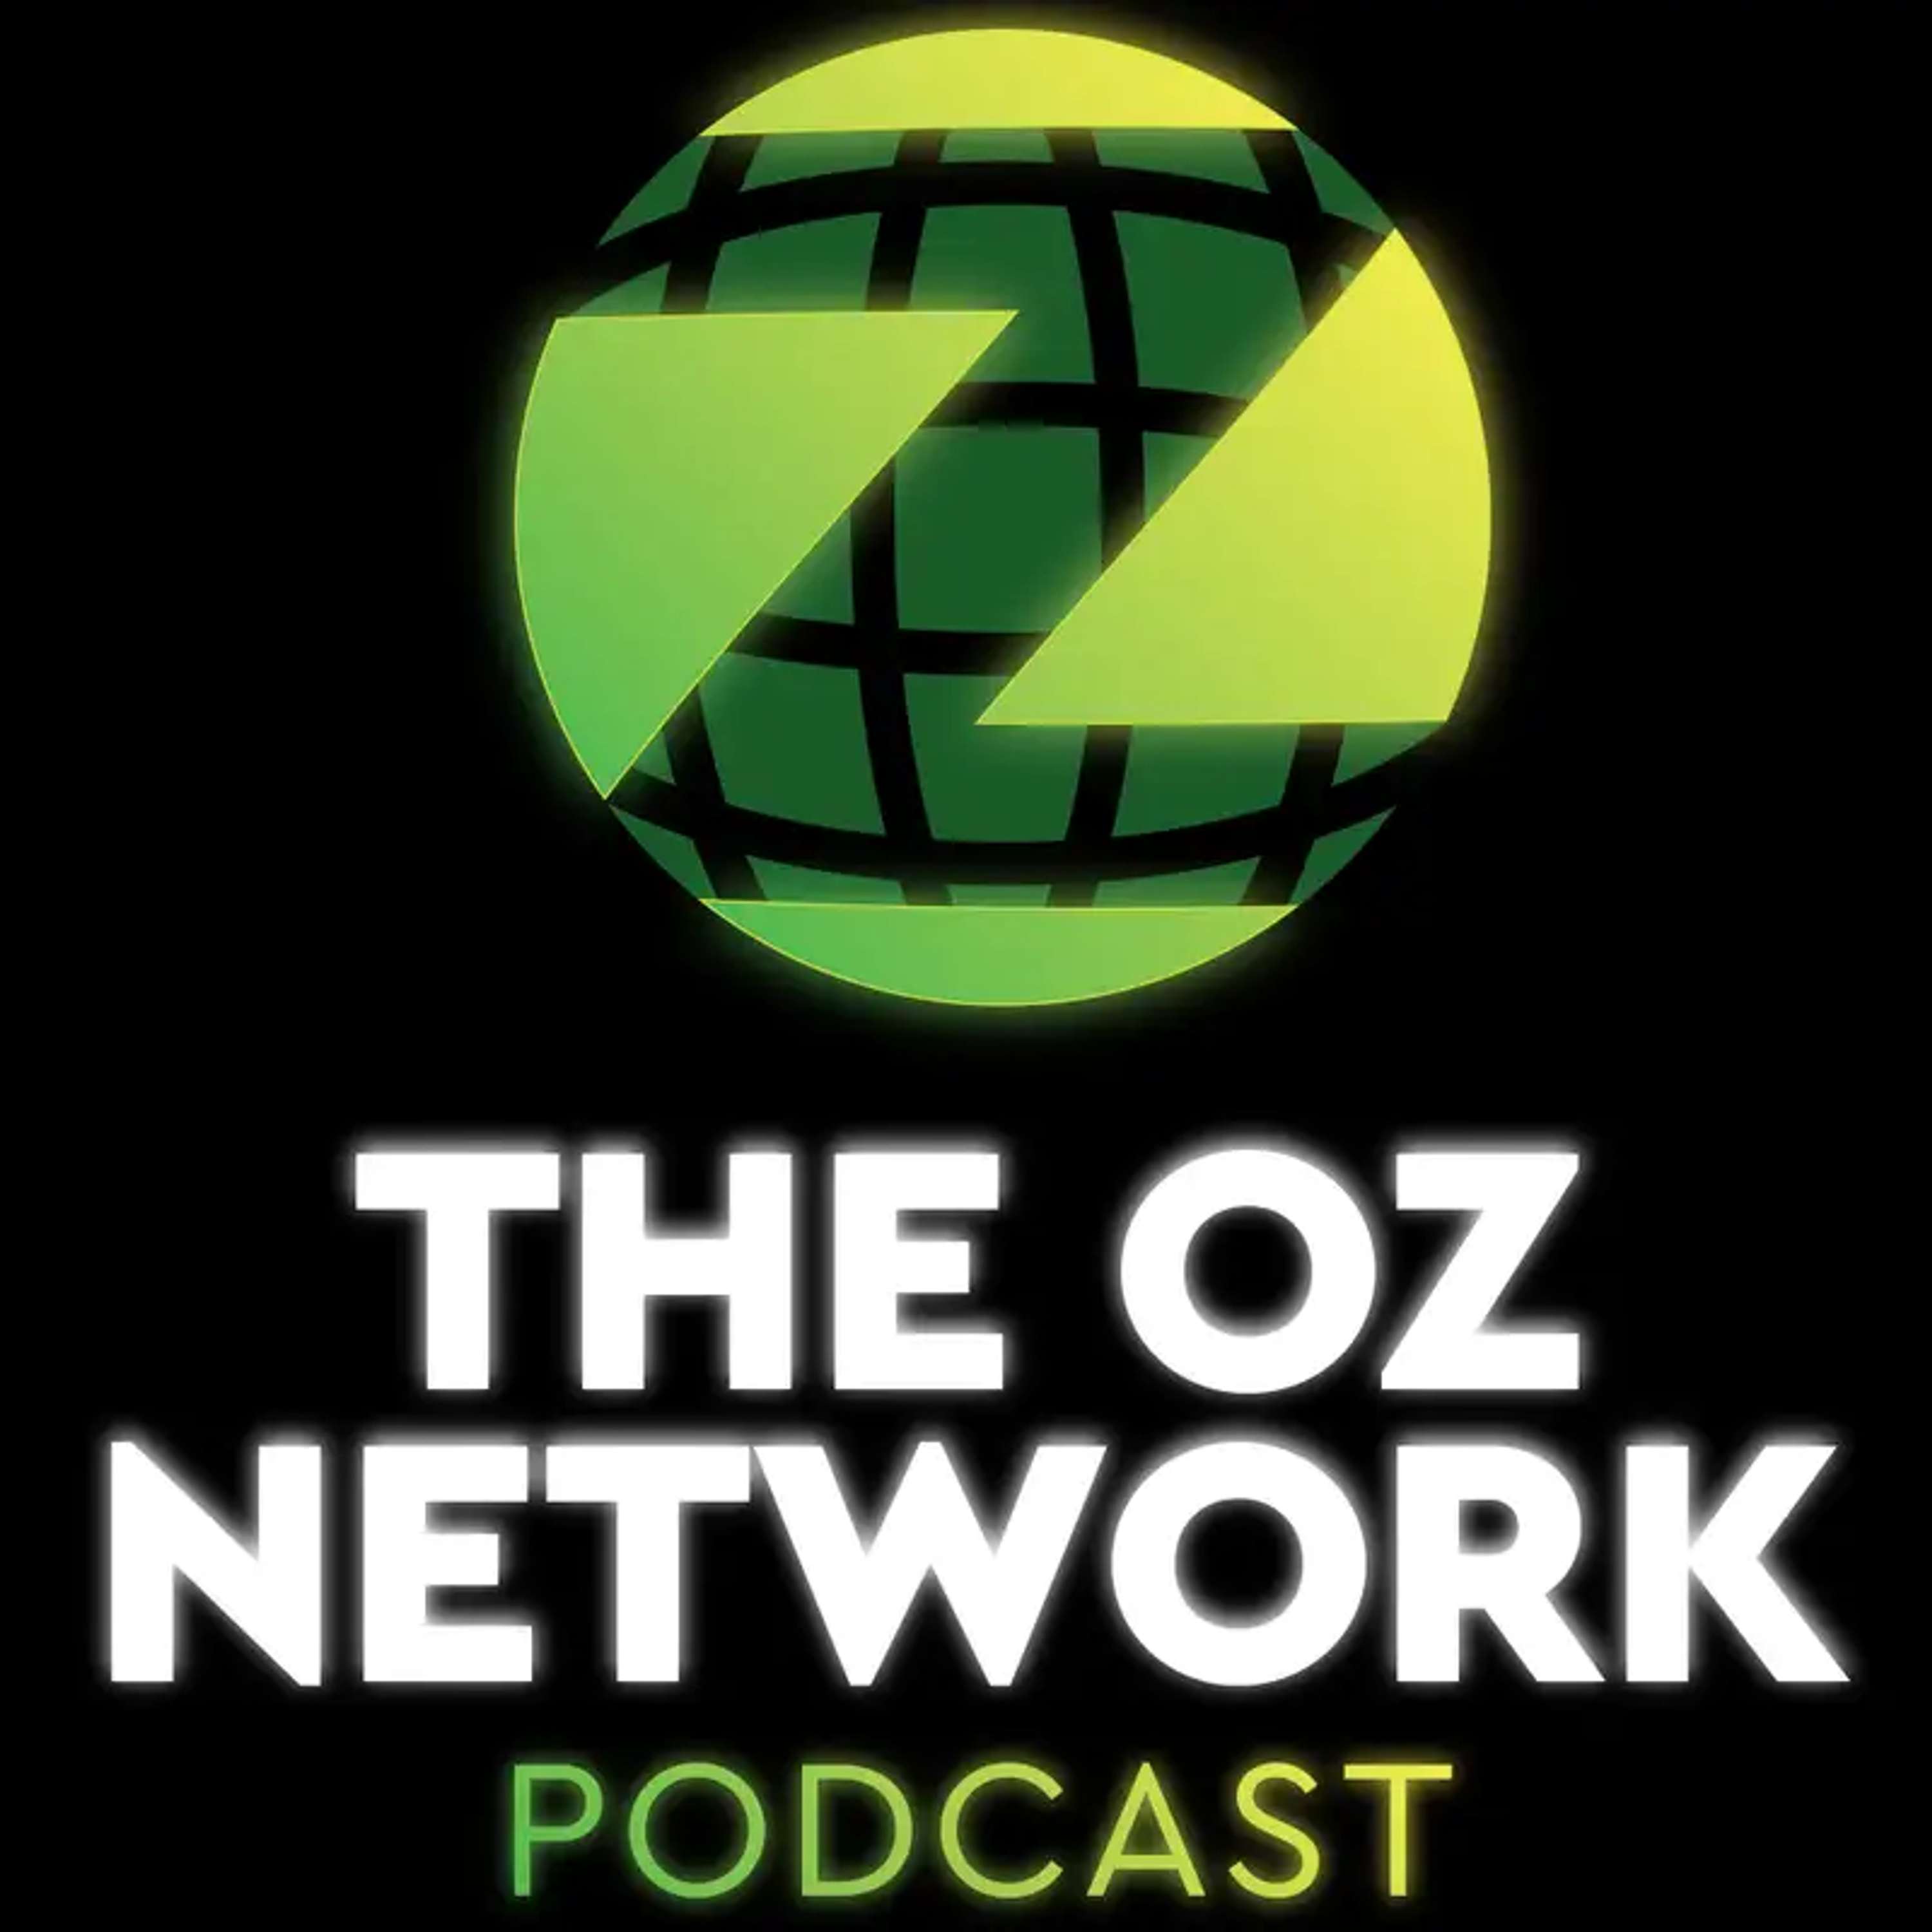 The Amazing Race Season 36, Episode 5 Recap - The Oz Network